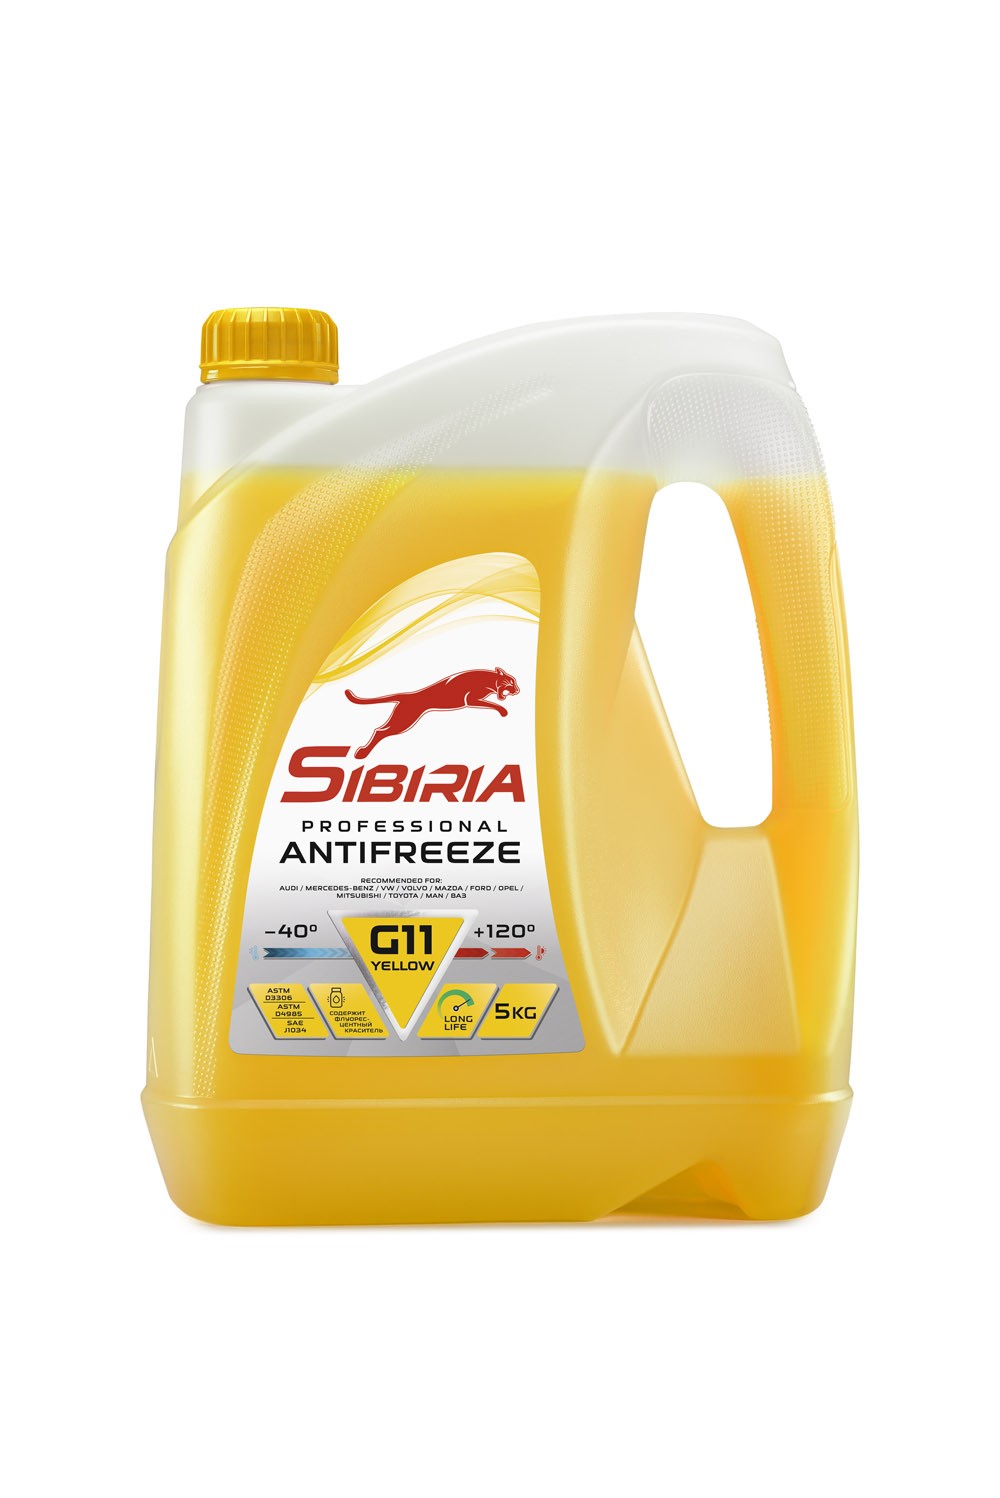 фото Антифриз sibiria antifreeze g11 (-40) желтый 5 кг